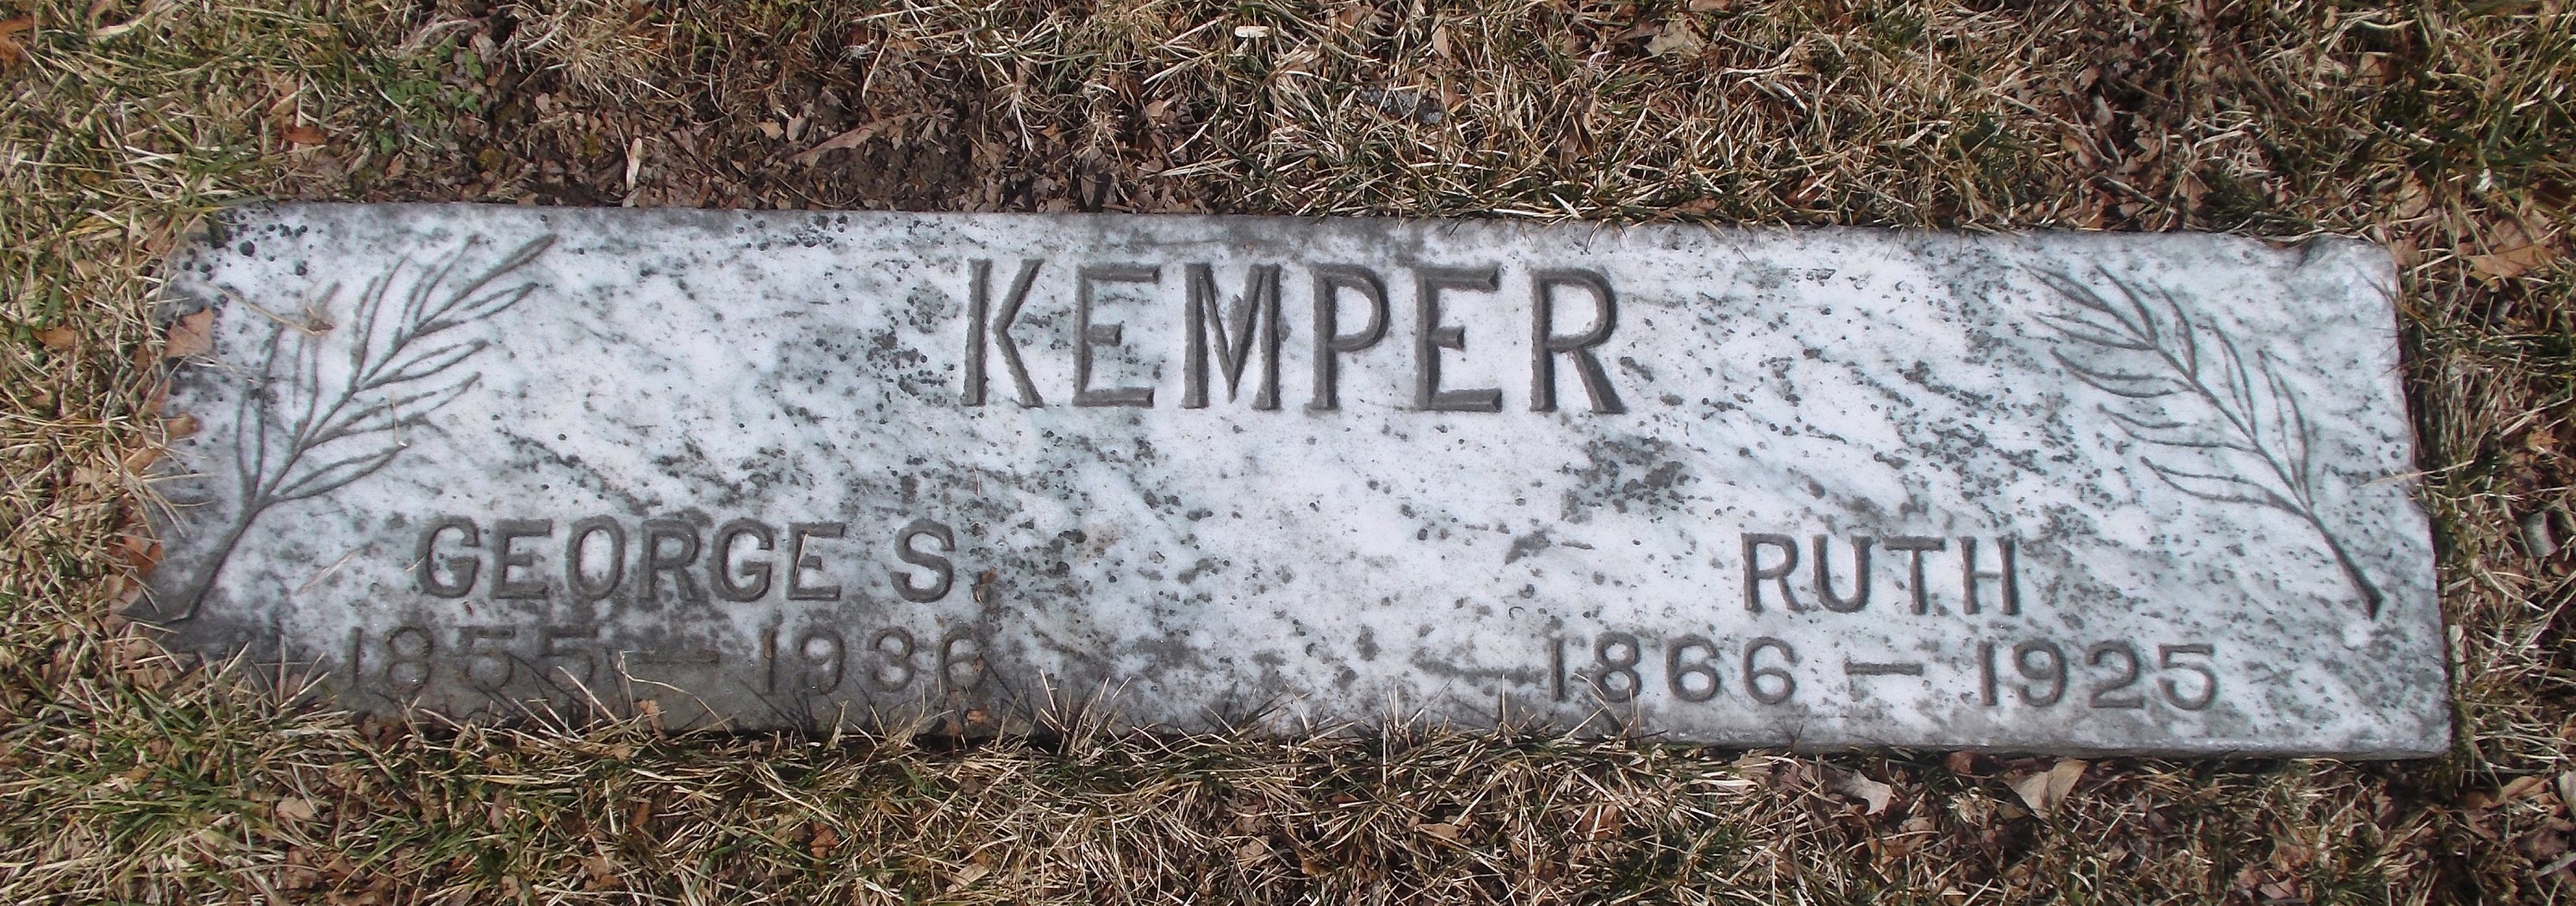 George S Kemper